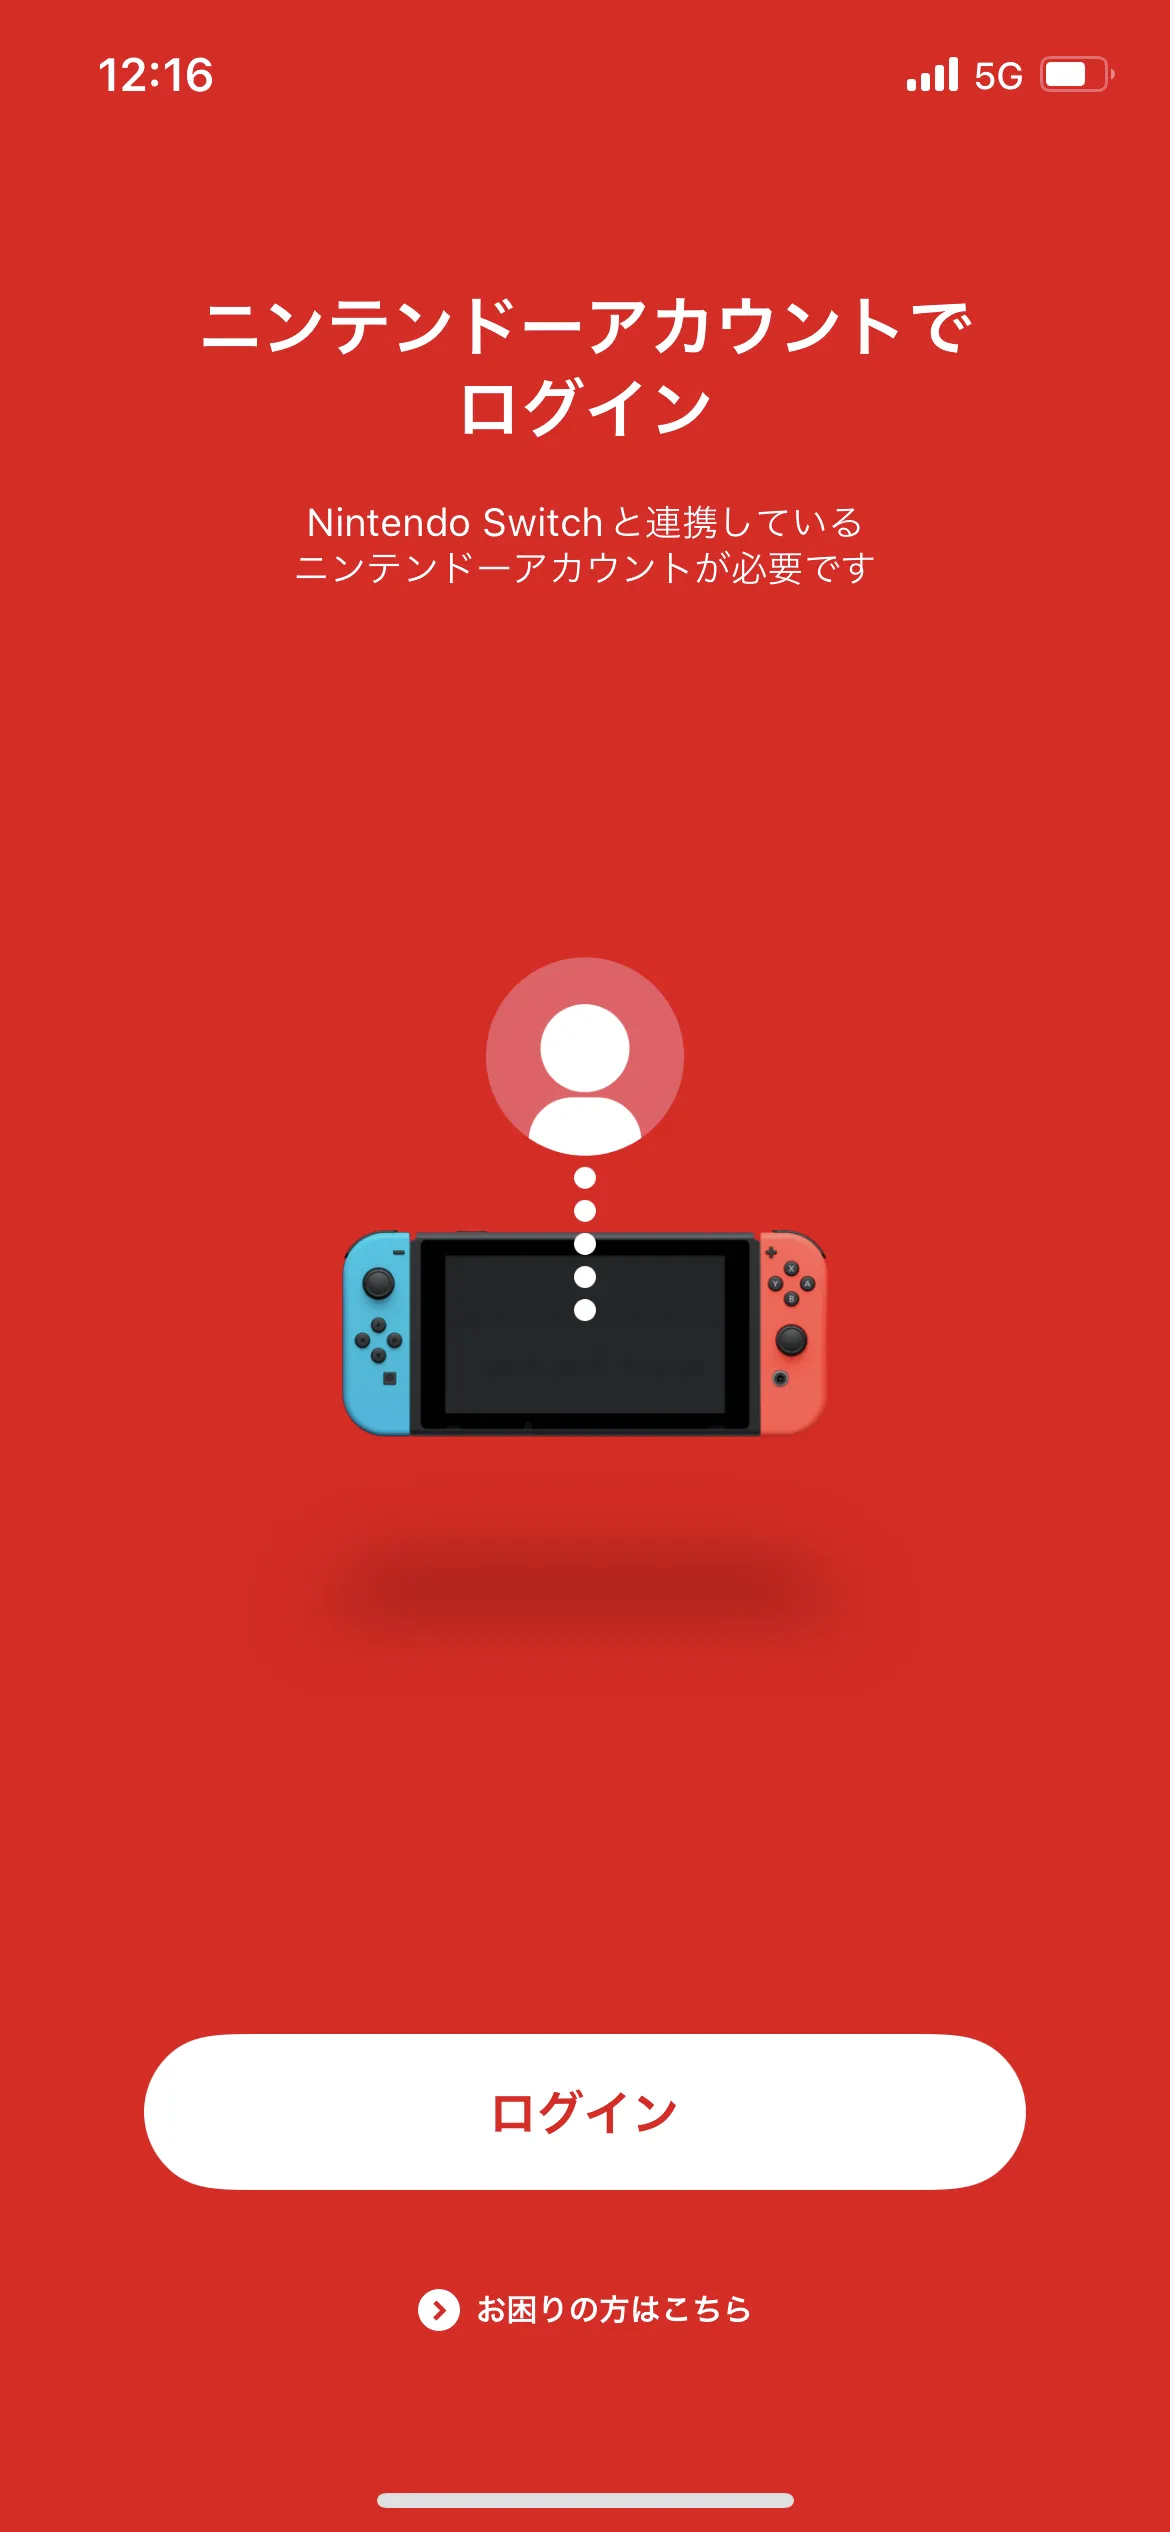 Nintendo Switch Online オンボーディング screen